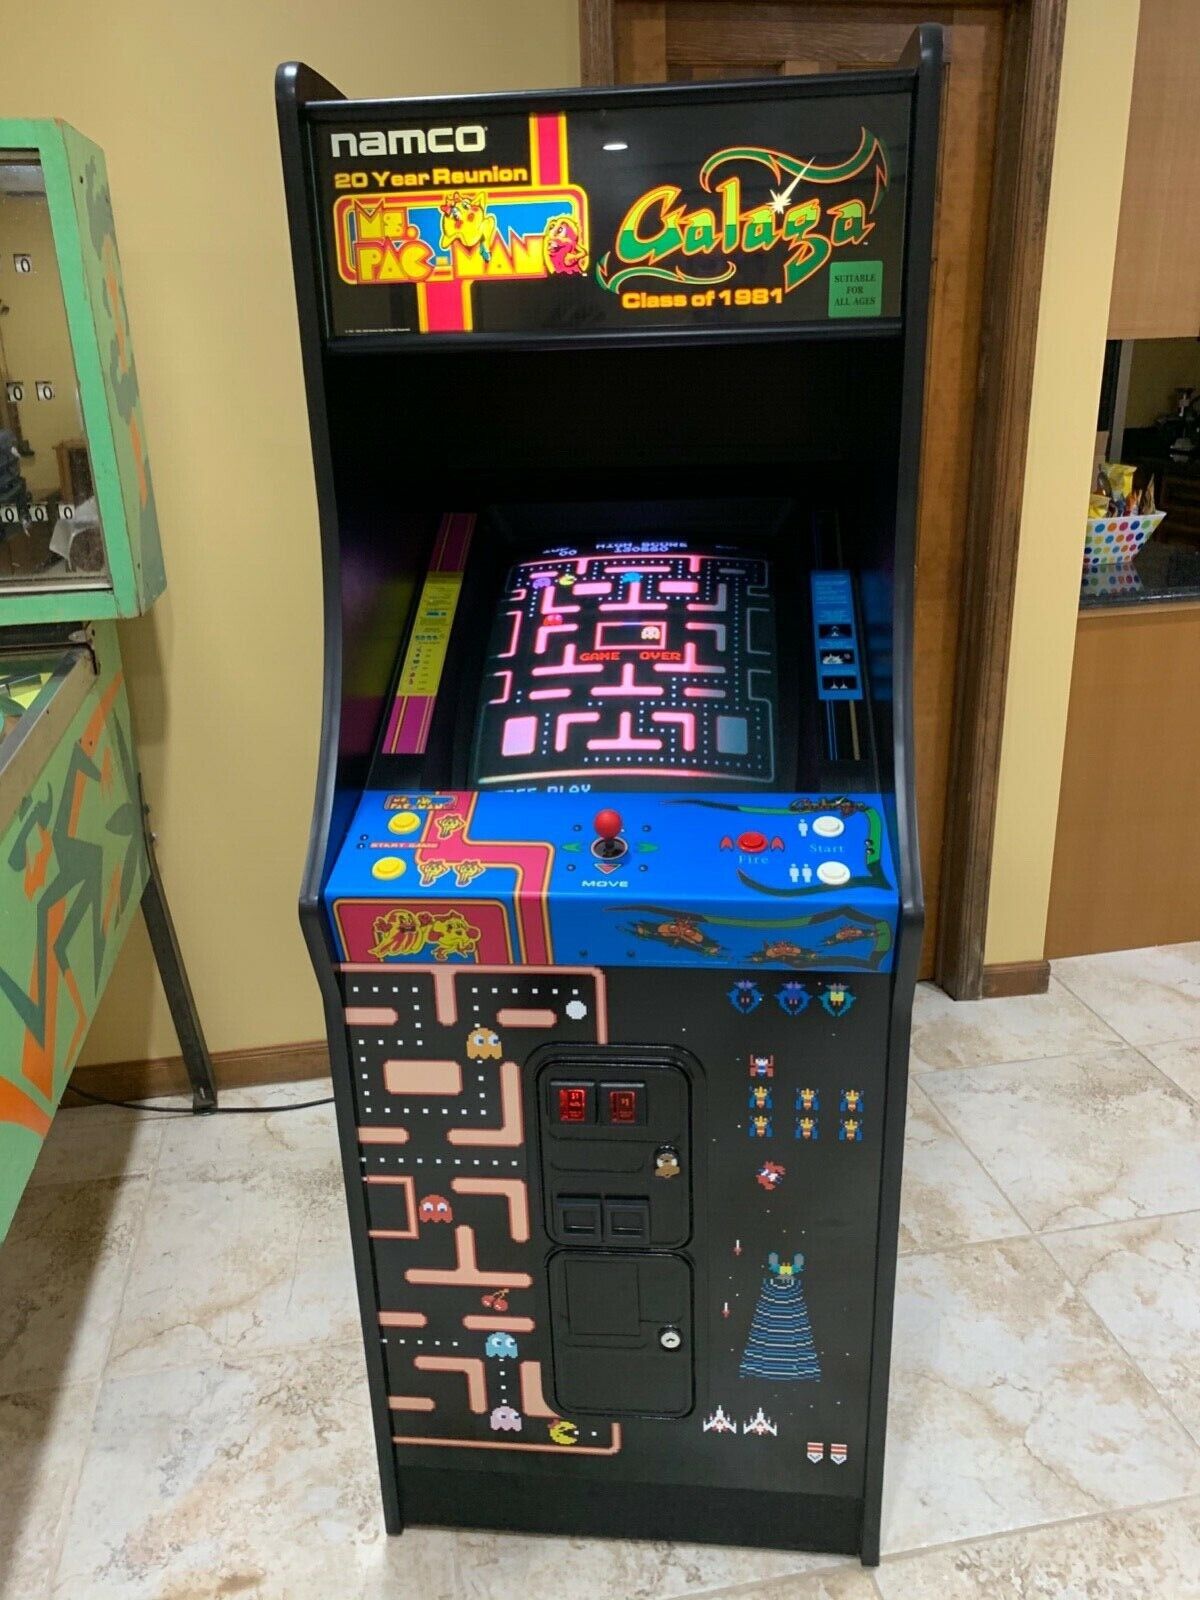 Ms. PacMan/Galaga 20 Year Reunion Arcade Machine